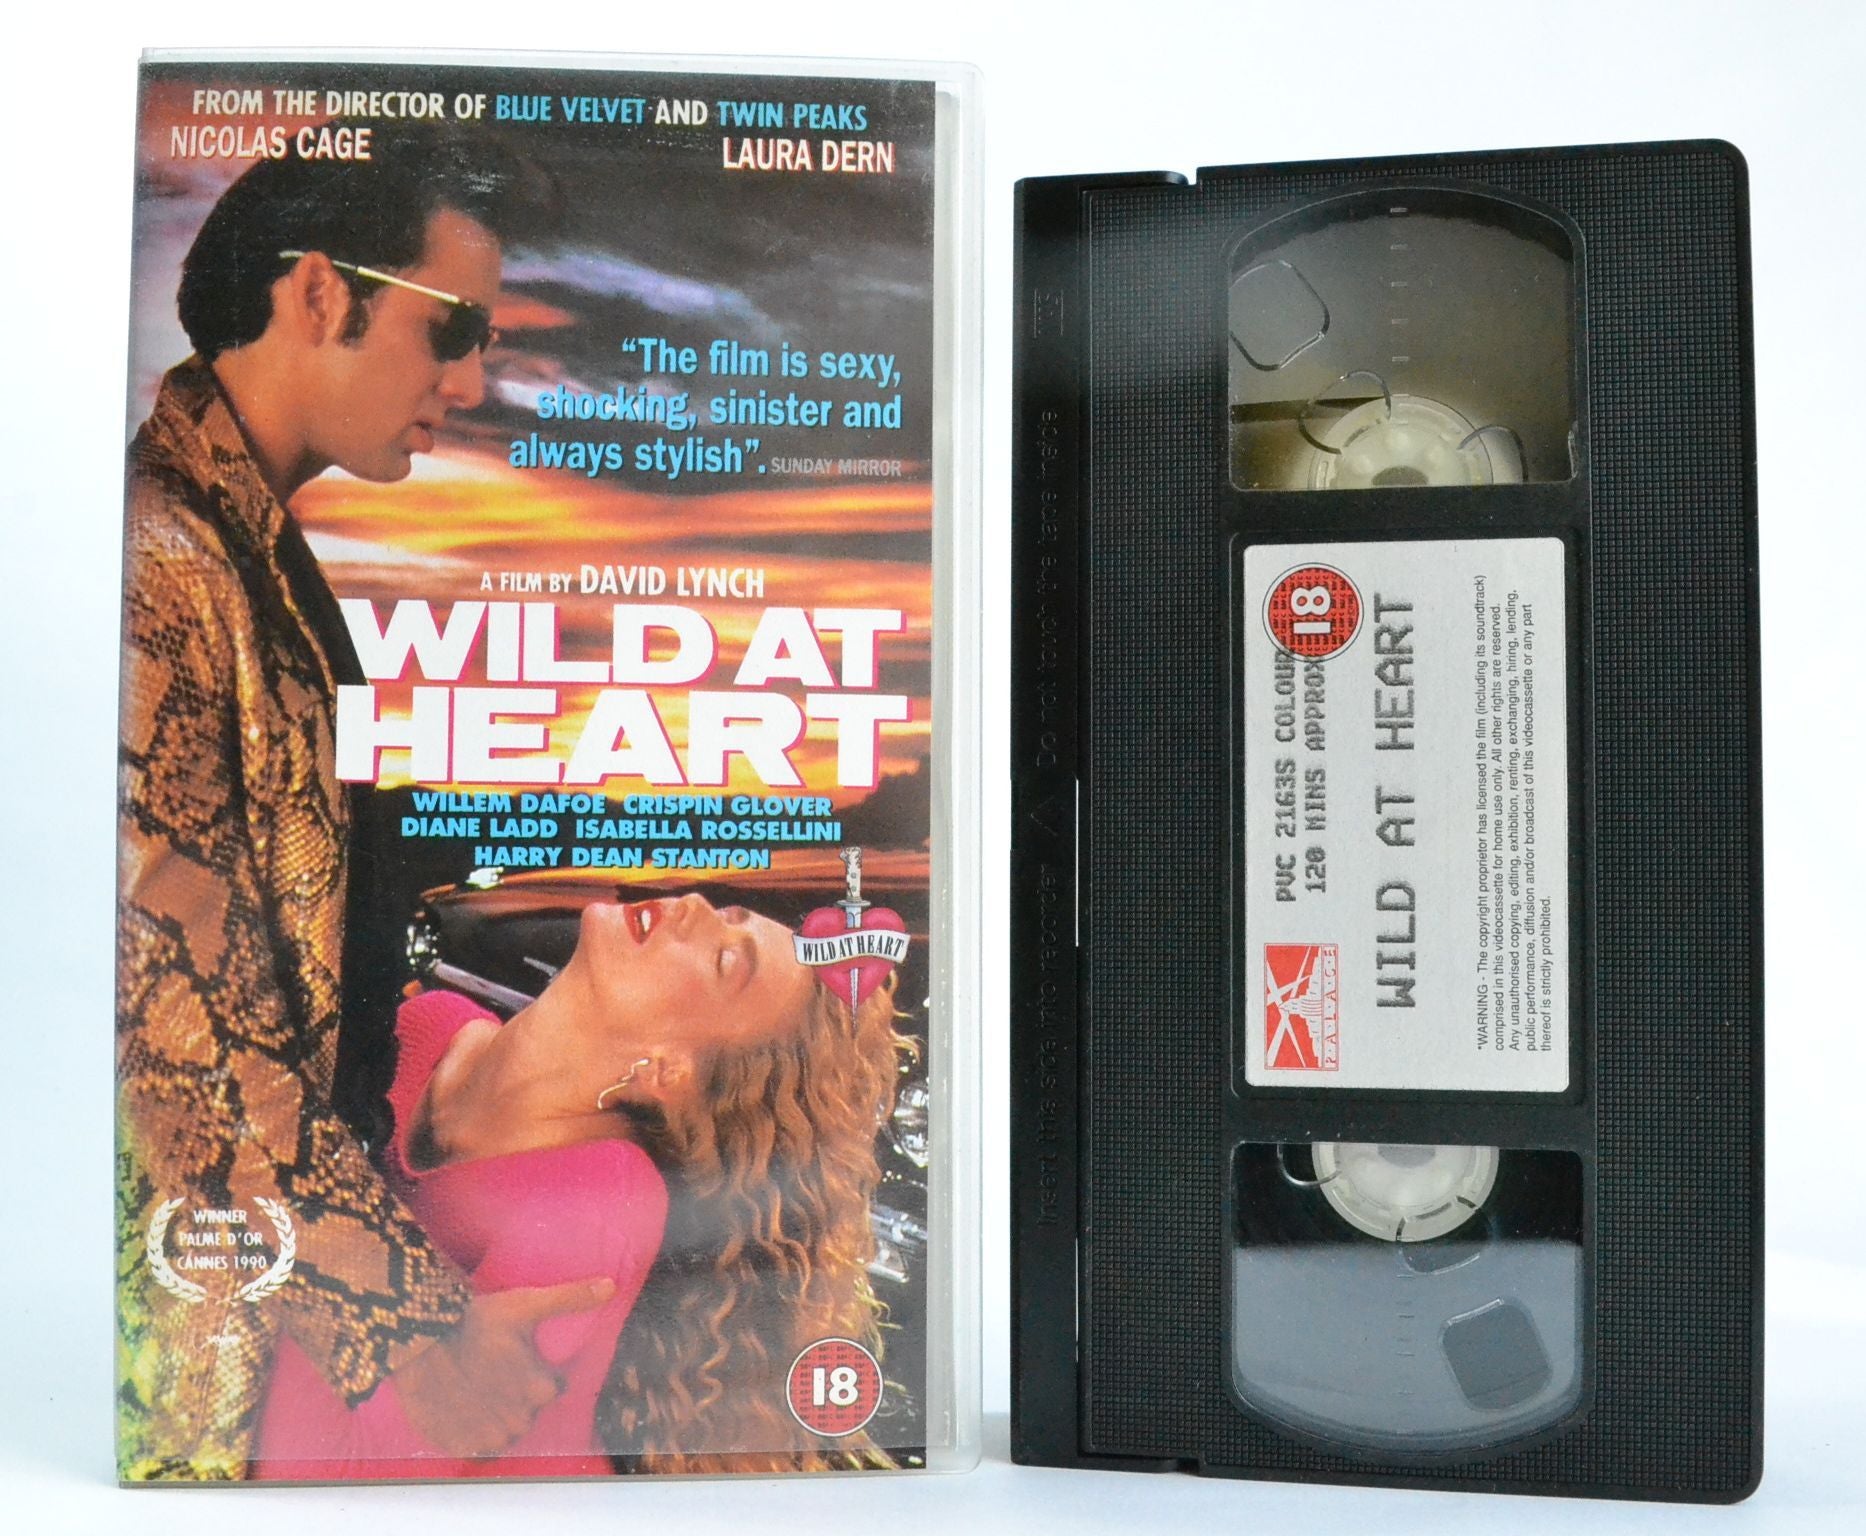 Wild At Heart: David Lynch - Nicolas Cage - Laura Dern - Danger Sex Violence - VHS-